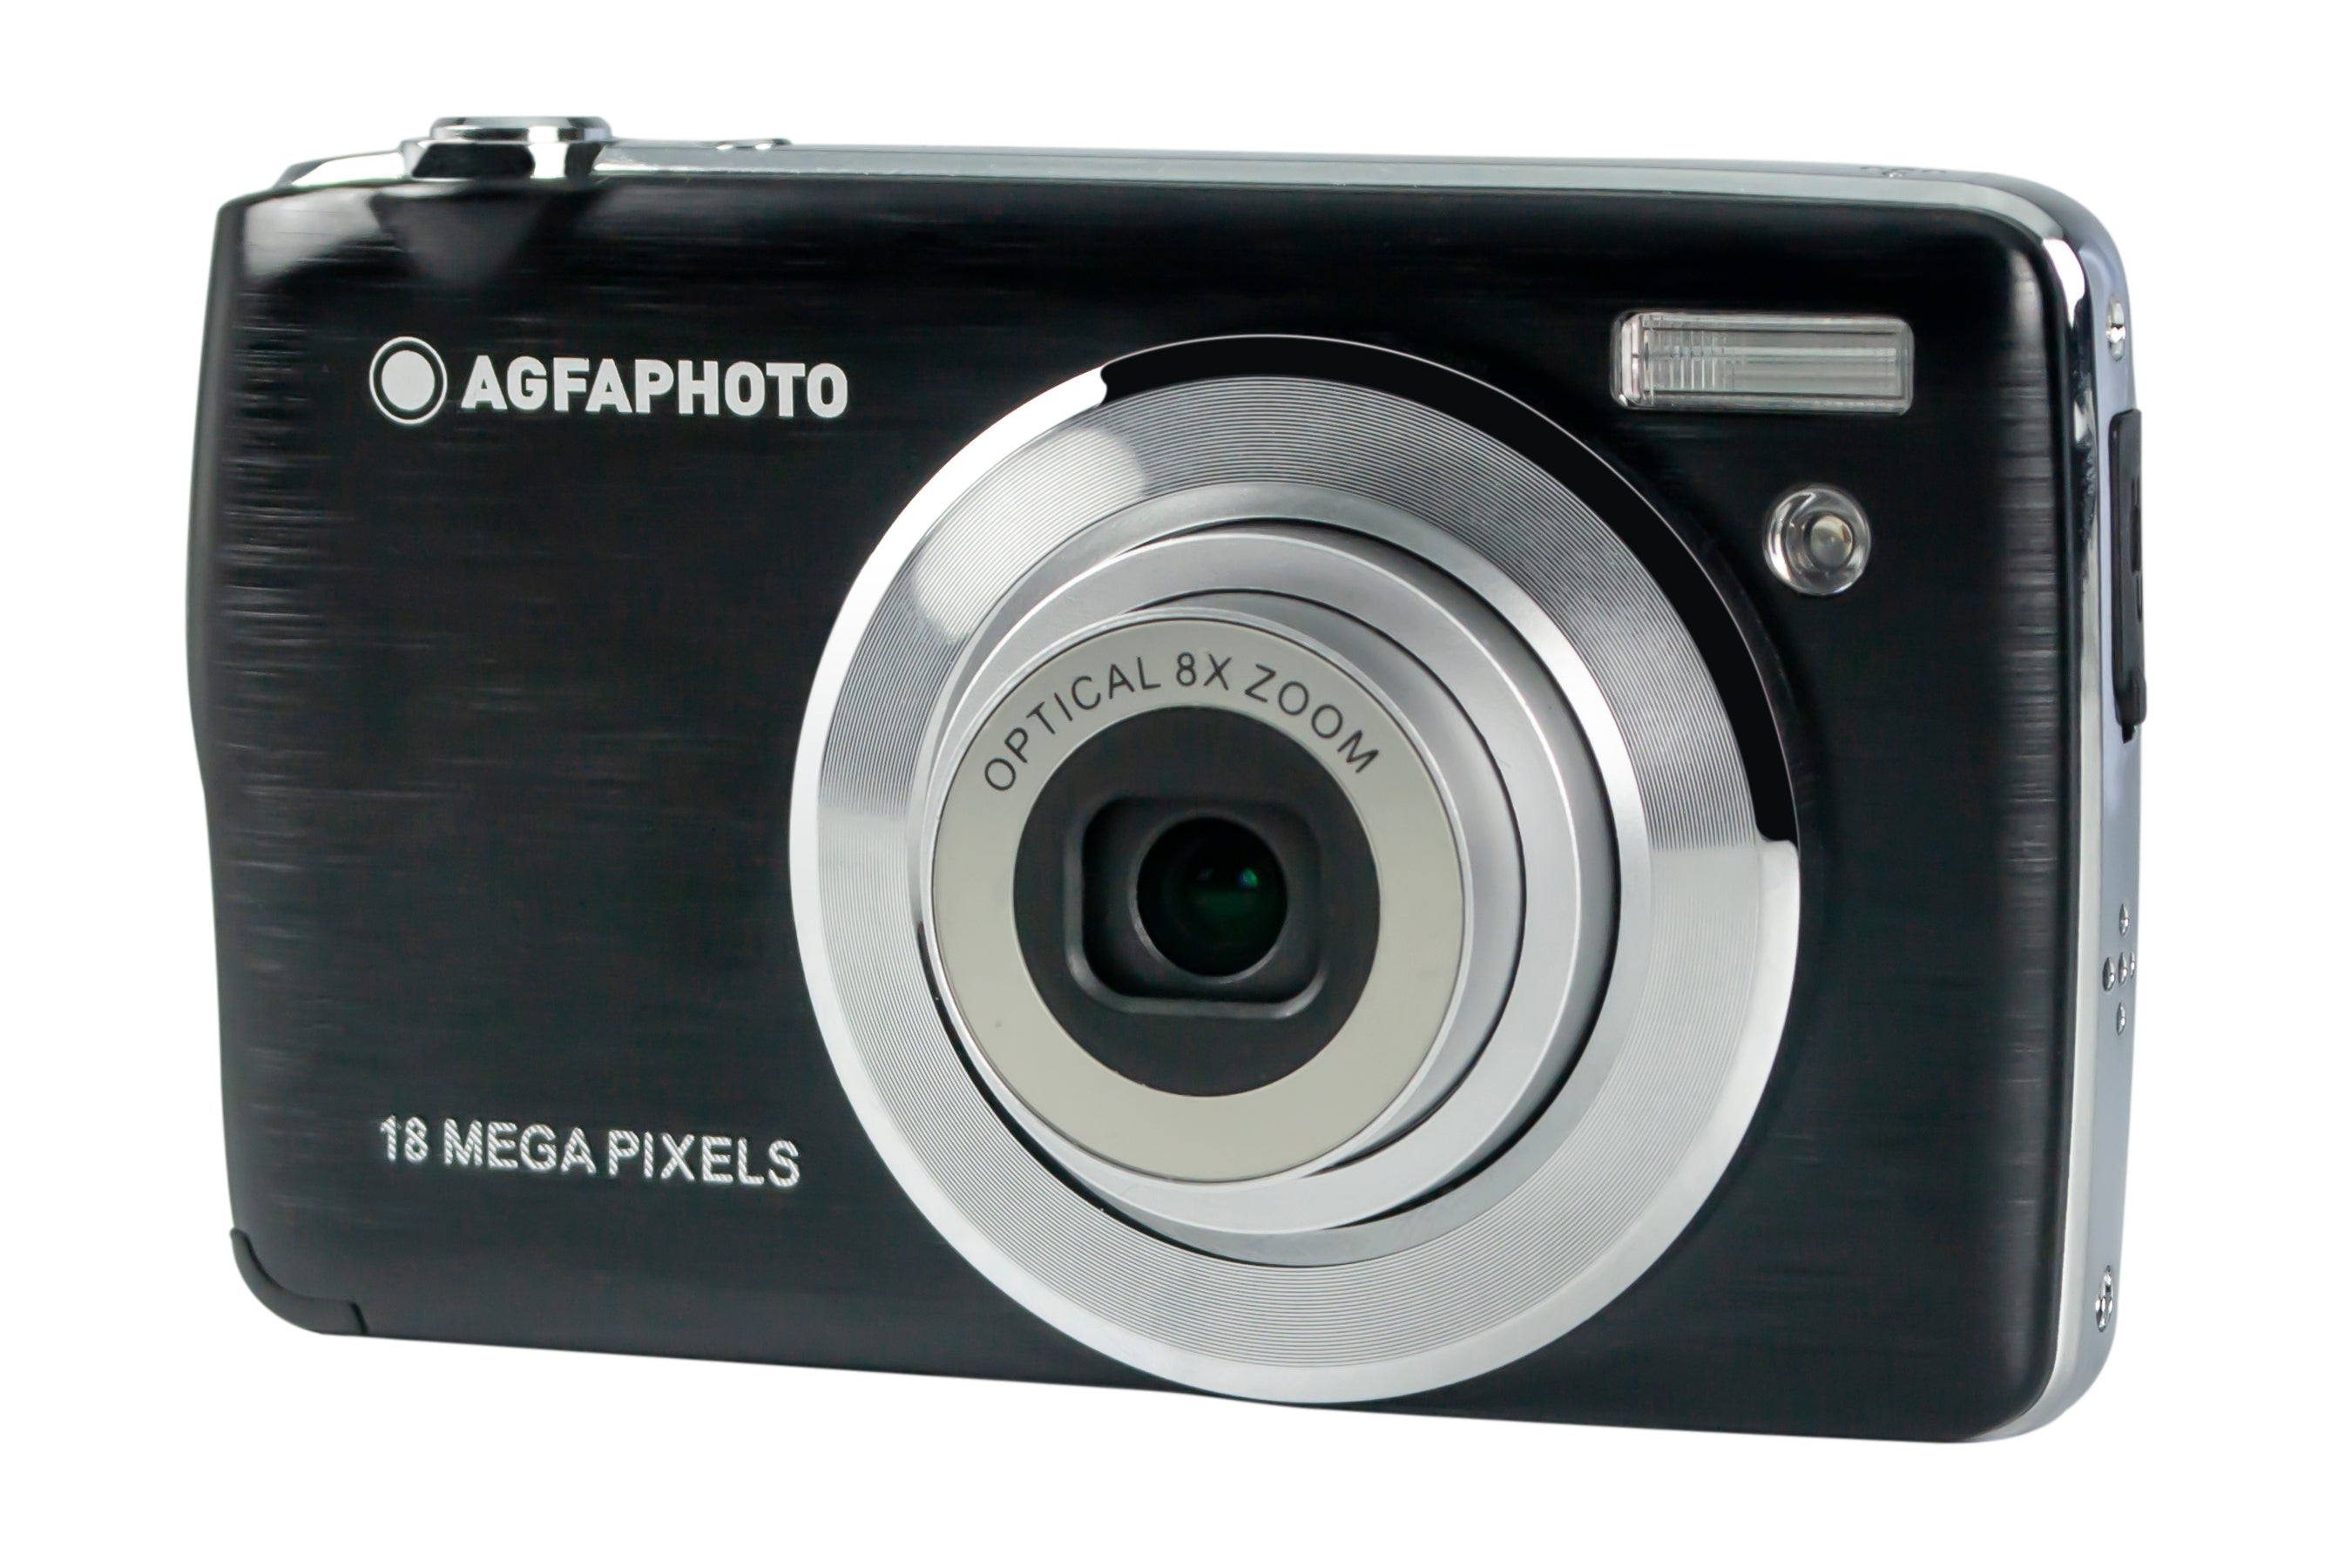 Agfa Photo Realishot DC8200 Compact Digital Camera (Black)